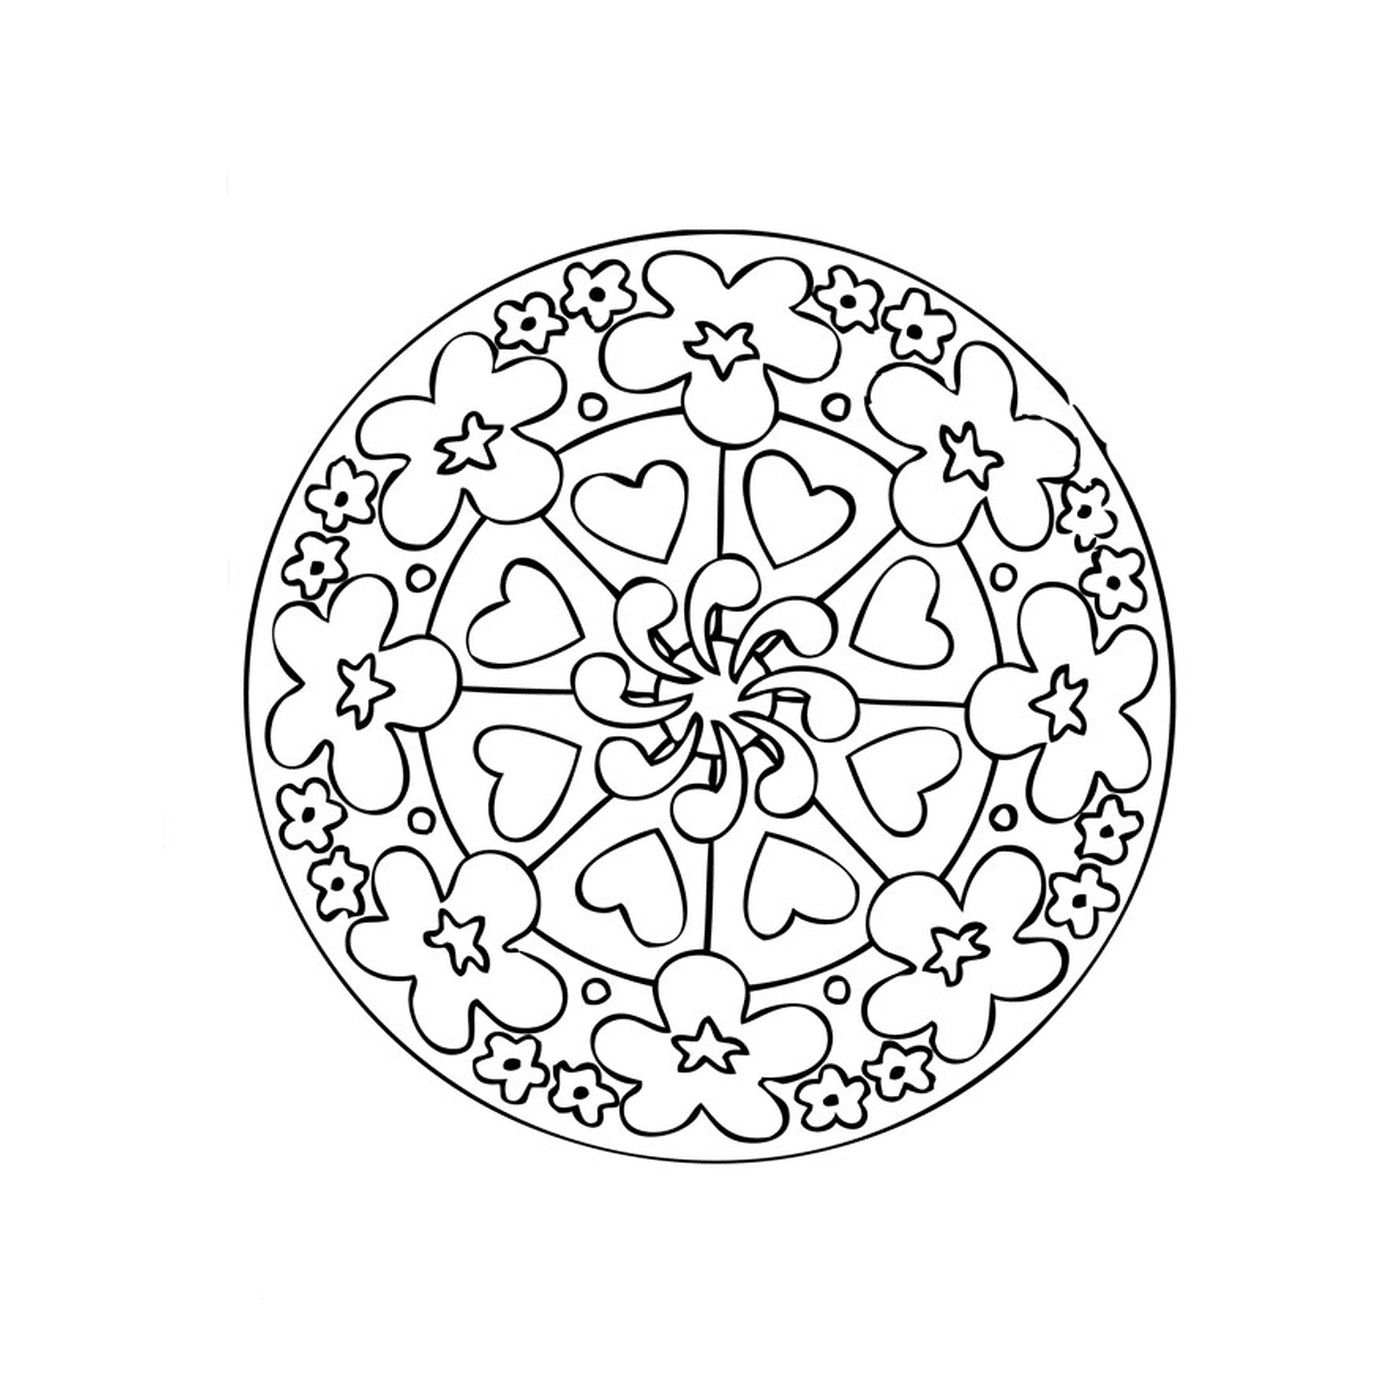  Mandala with hearts and stars 